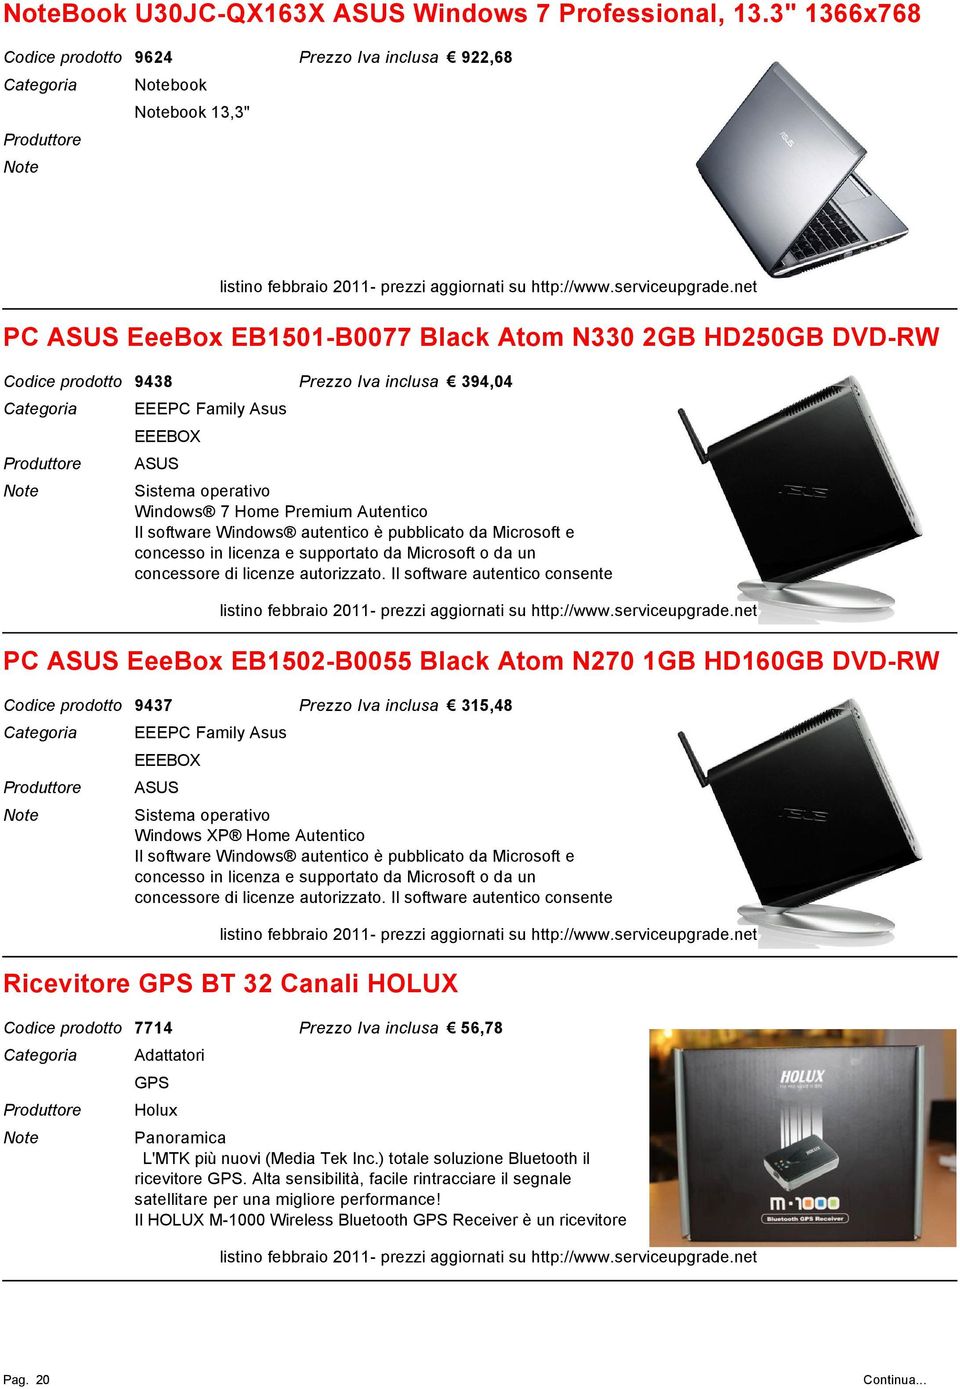 Autentico PC EeeBox EB1502-B0055 Black Atom N270 1GB HD160GB DVD-RW 9437 EEEPC Family Asus EEEBOX 315,48 Windows XP Home Autentico Ricevitore GPS BT 32 Canali